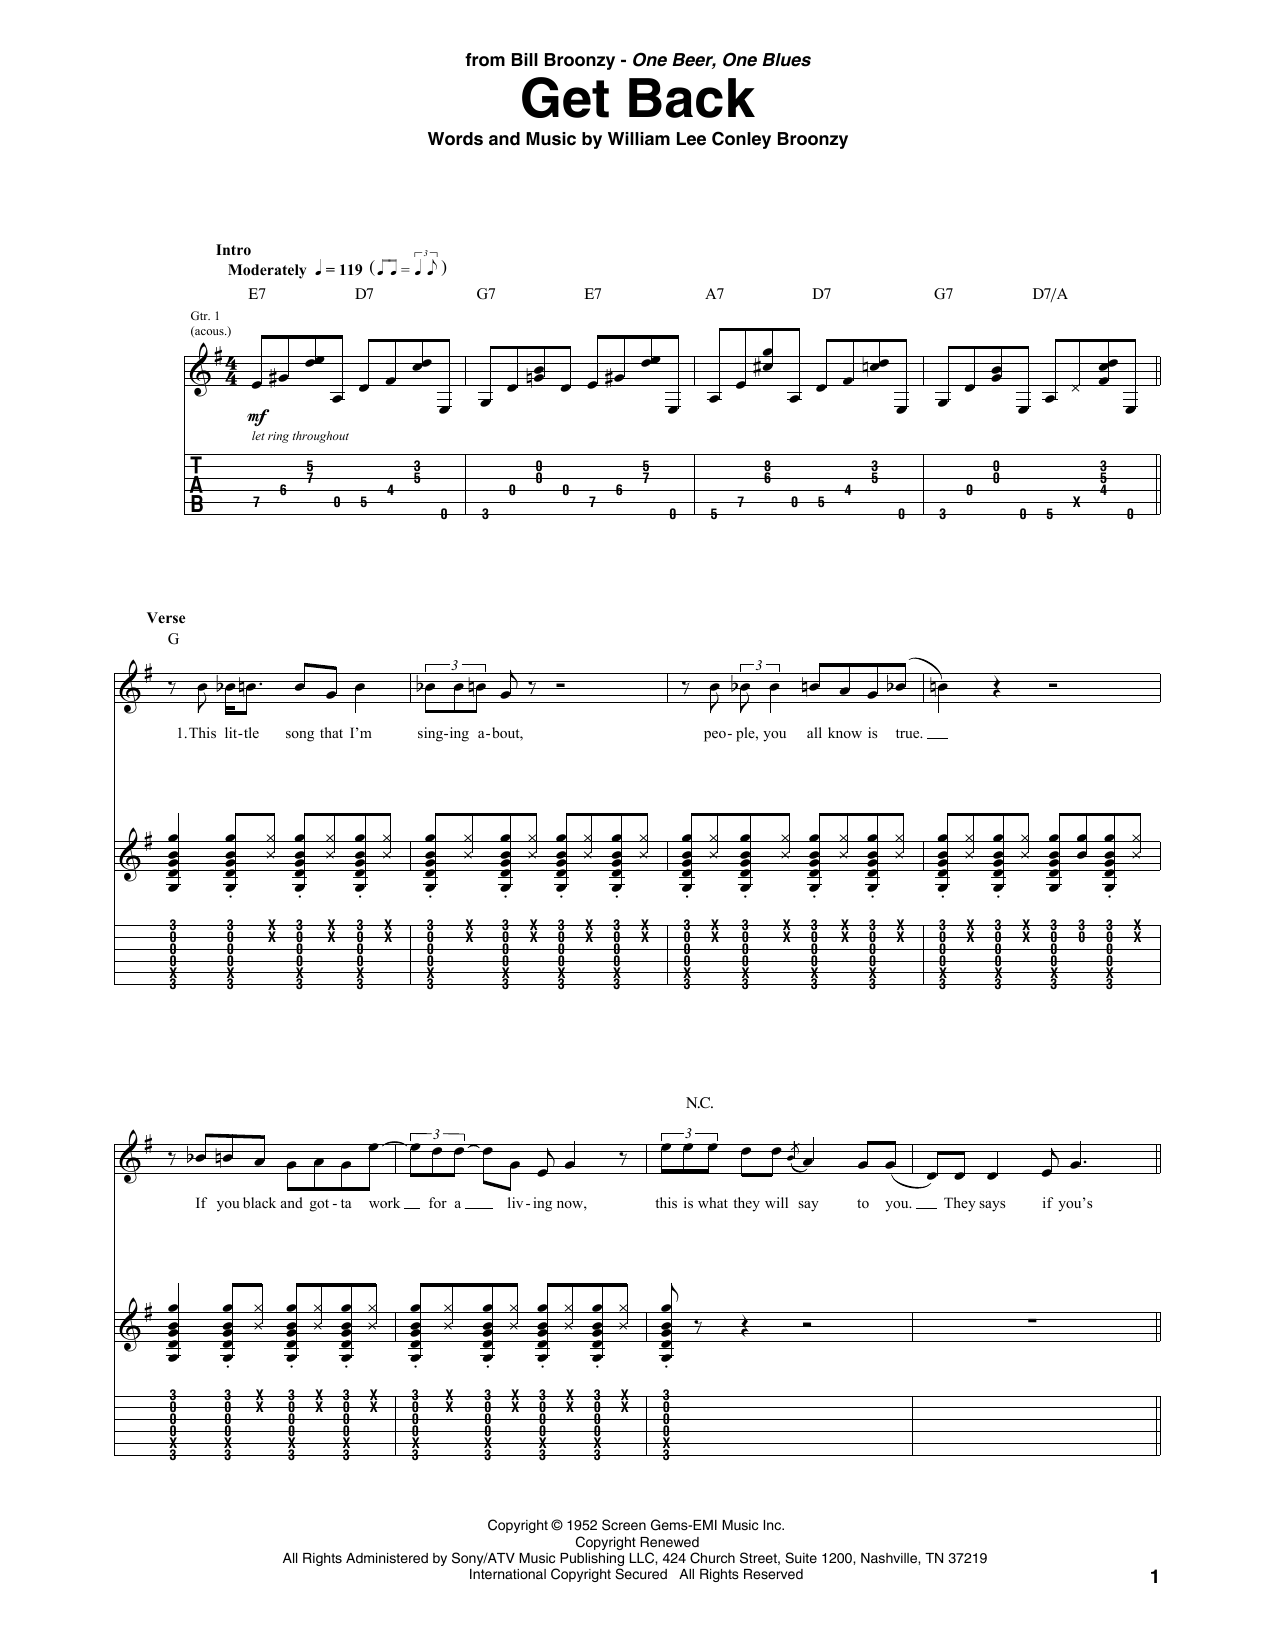 Big Bill Broonzy Get Back Sheet Music Notes & Chords for Guitar Tab - Download or Print PDF